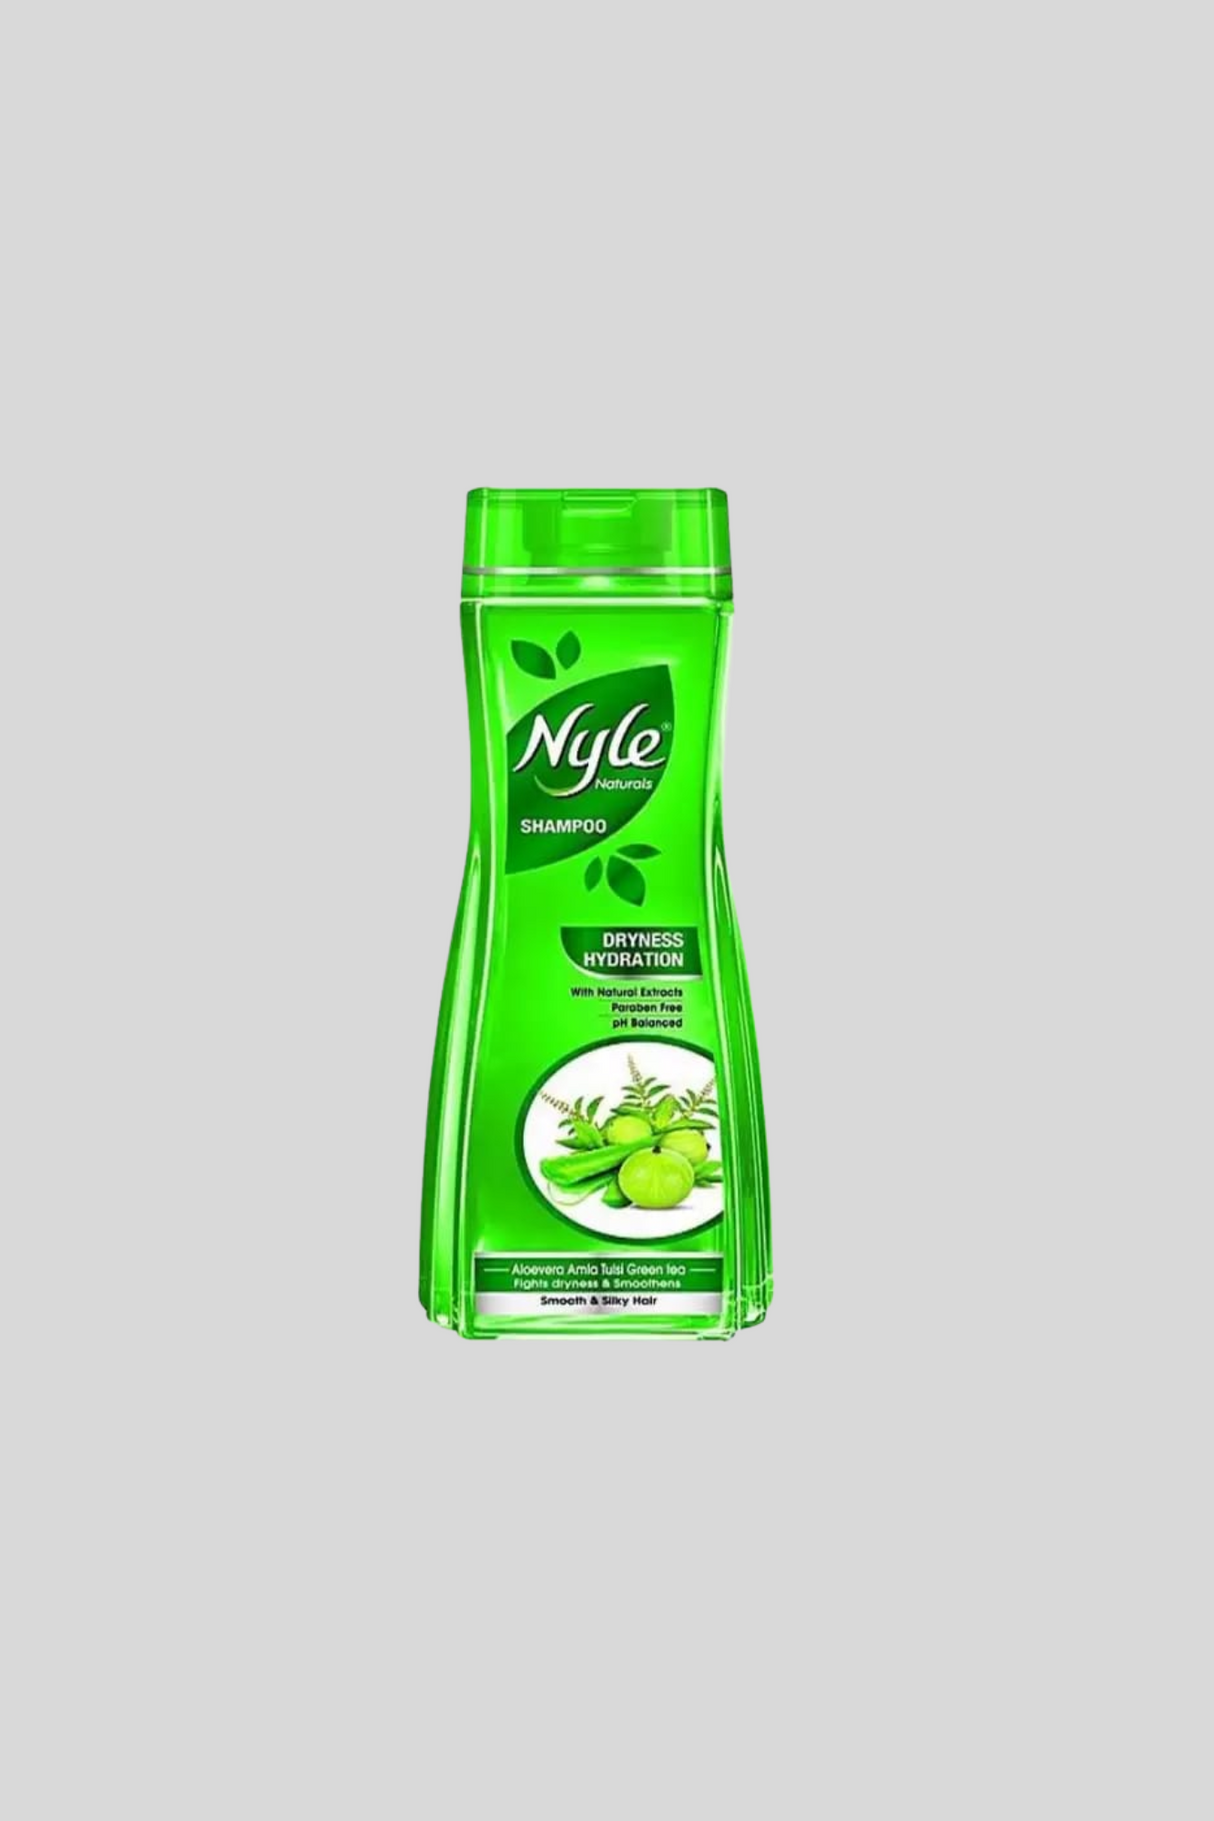 nyle shampoo dryness hydration 400ml